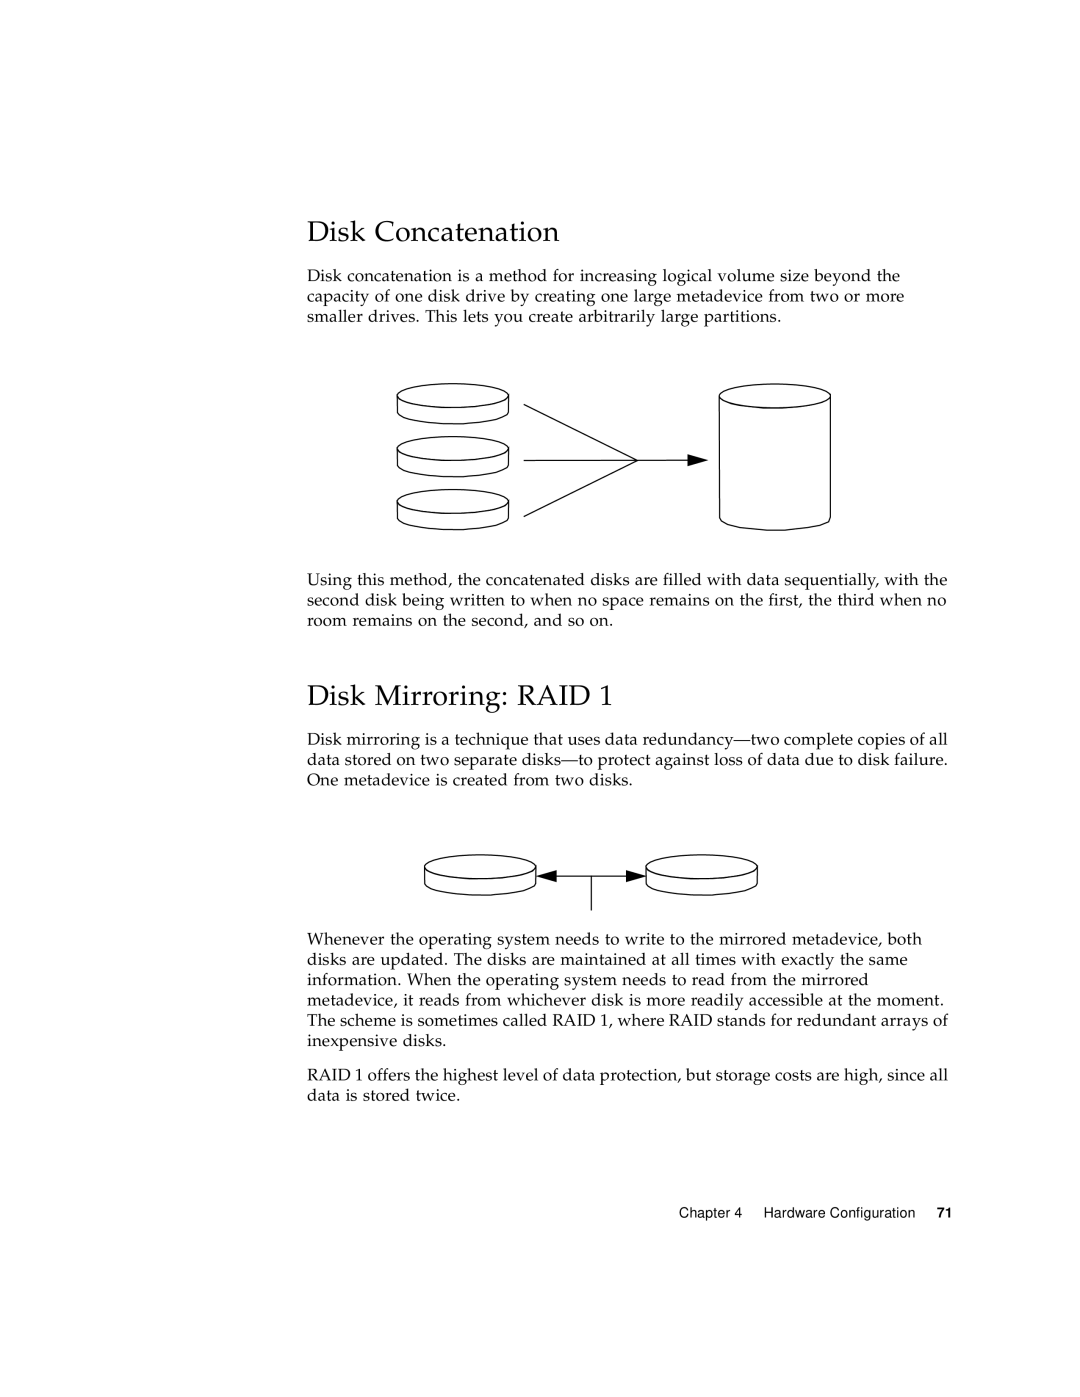 Sun Microsystems 220R manual Disk Concatenation, Disk Mirroring RAID 